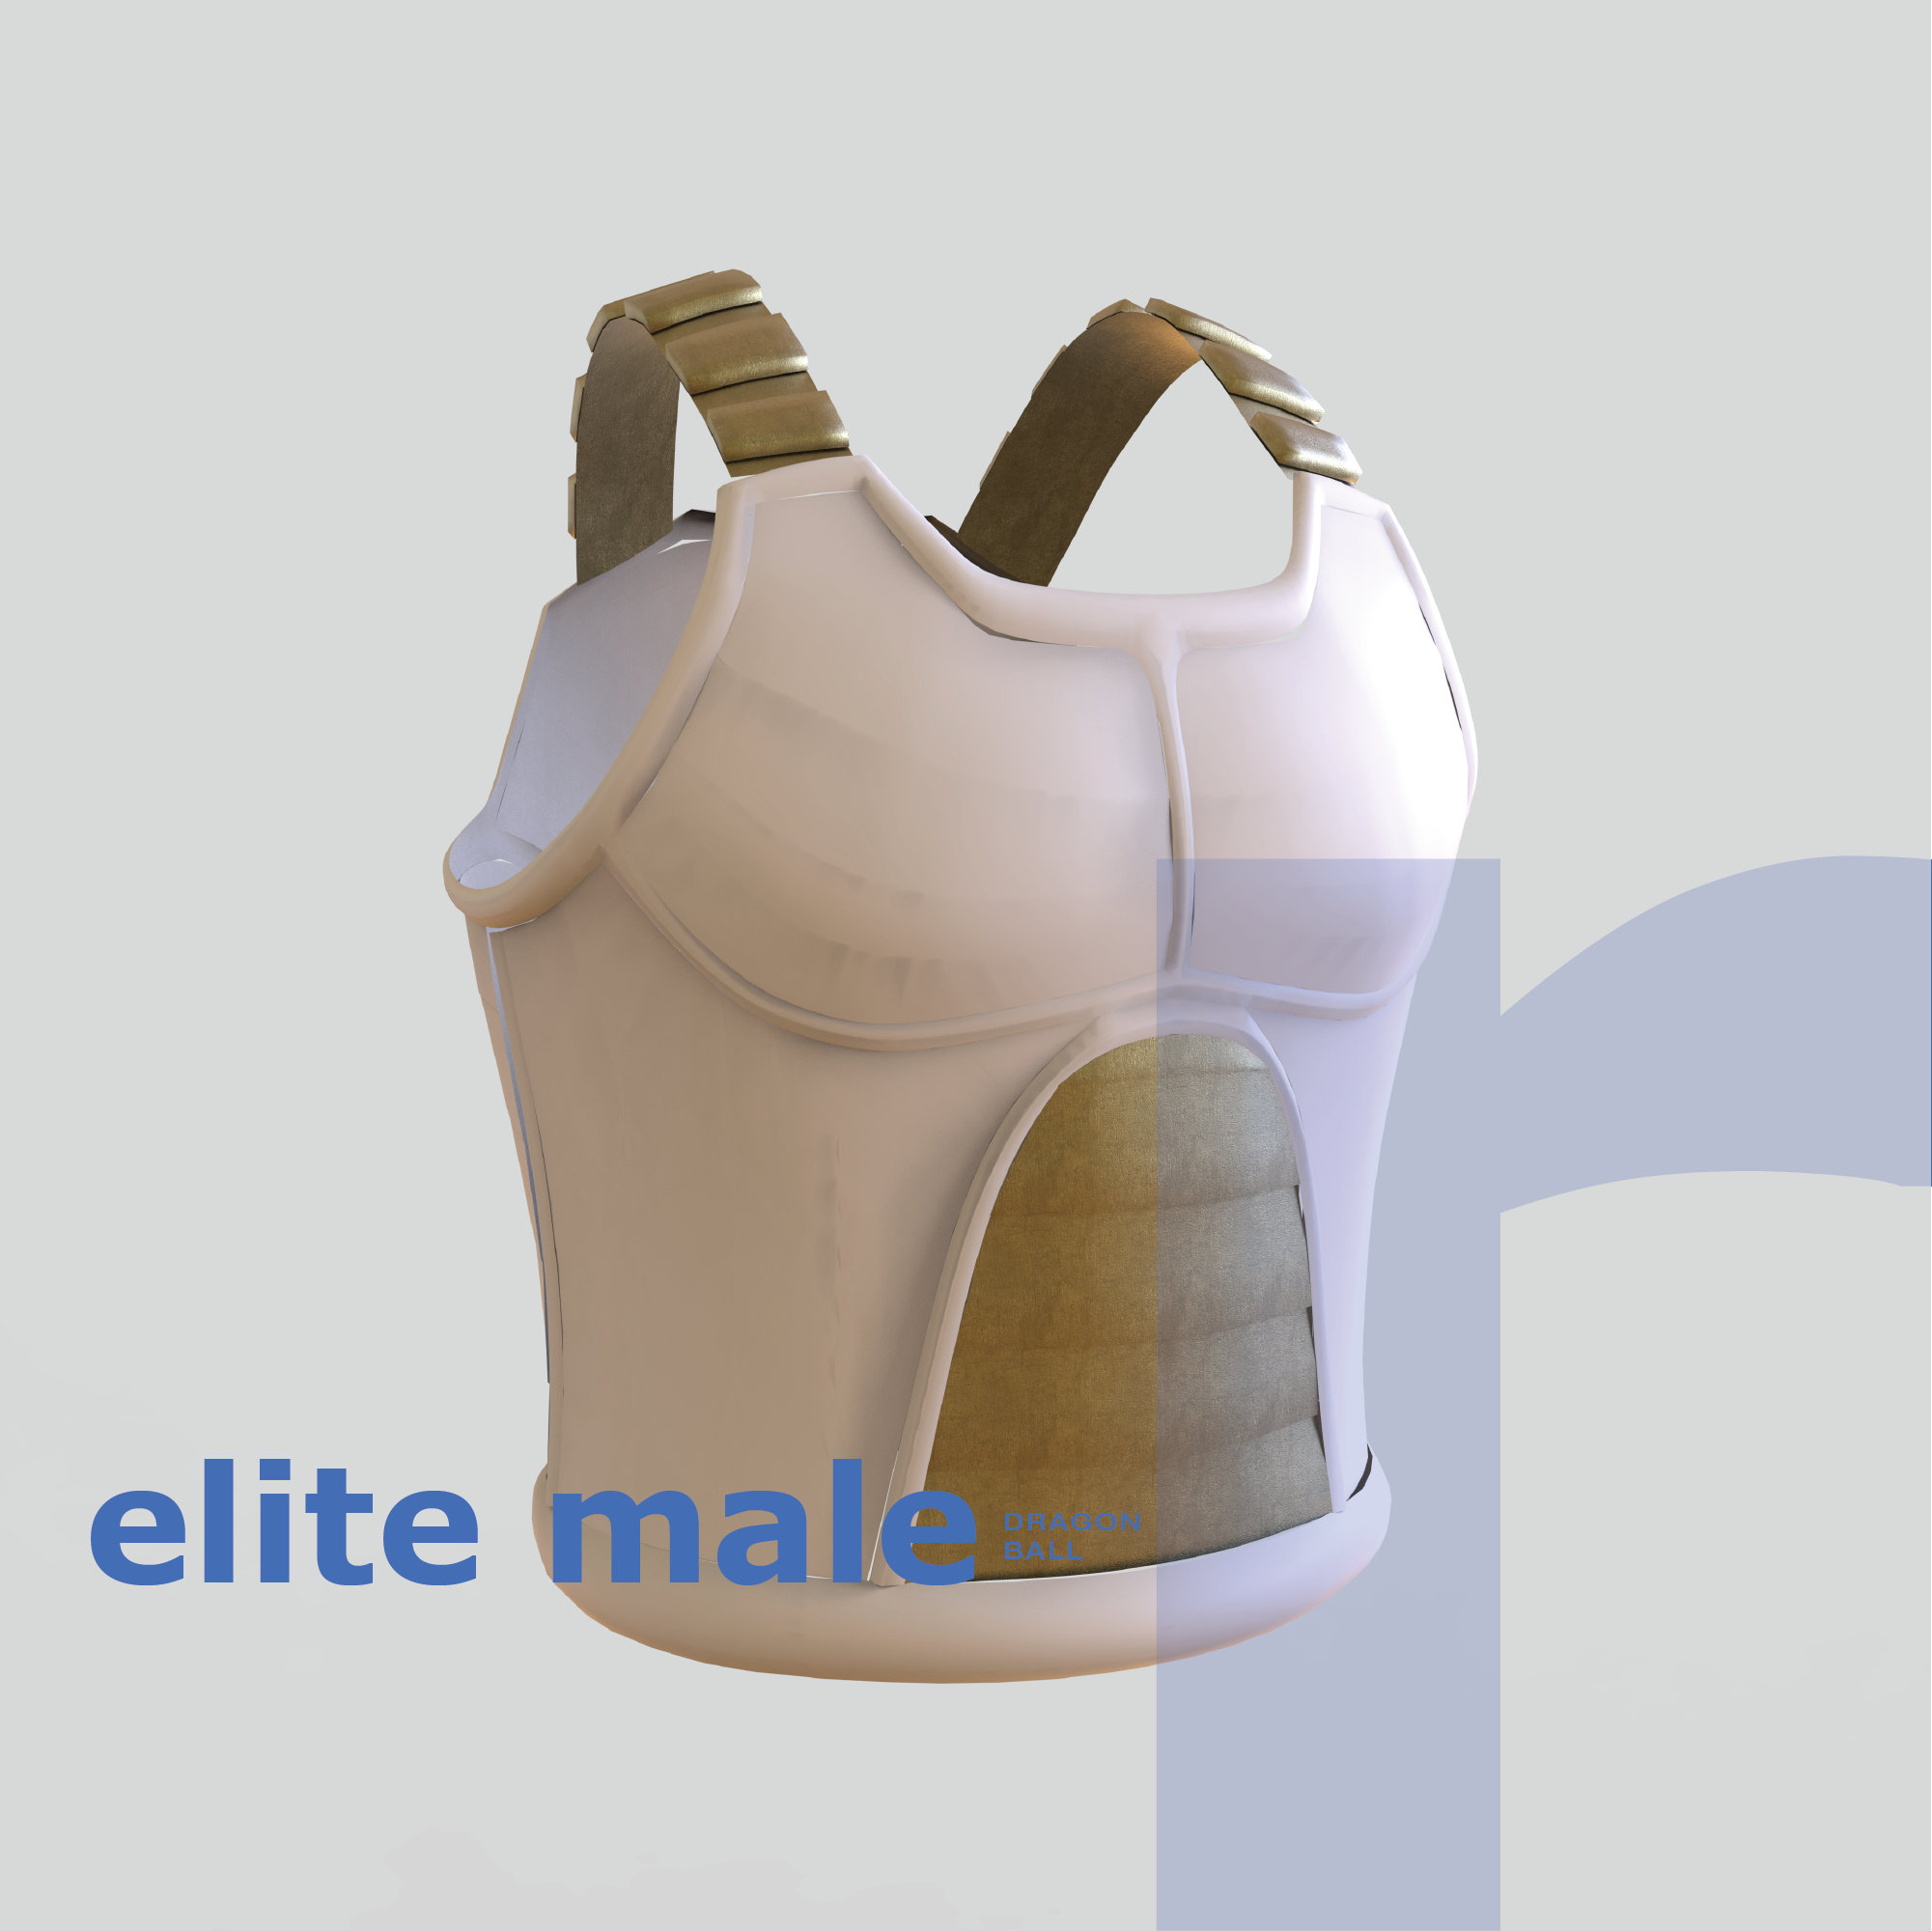 EVA foam: cosplay armor has never been easier (if you use a cricut)